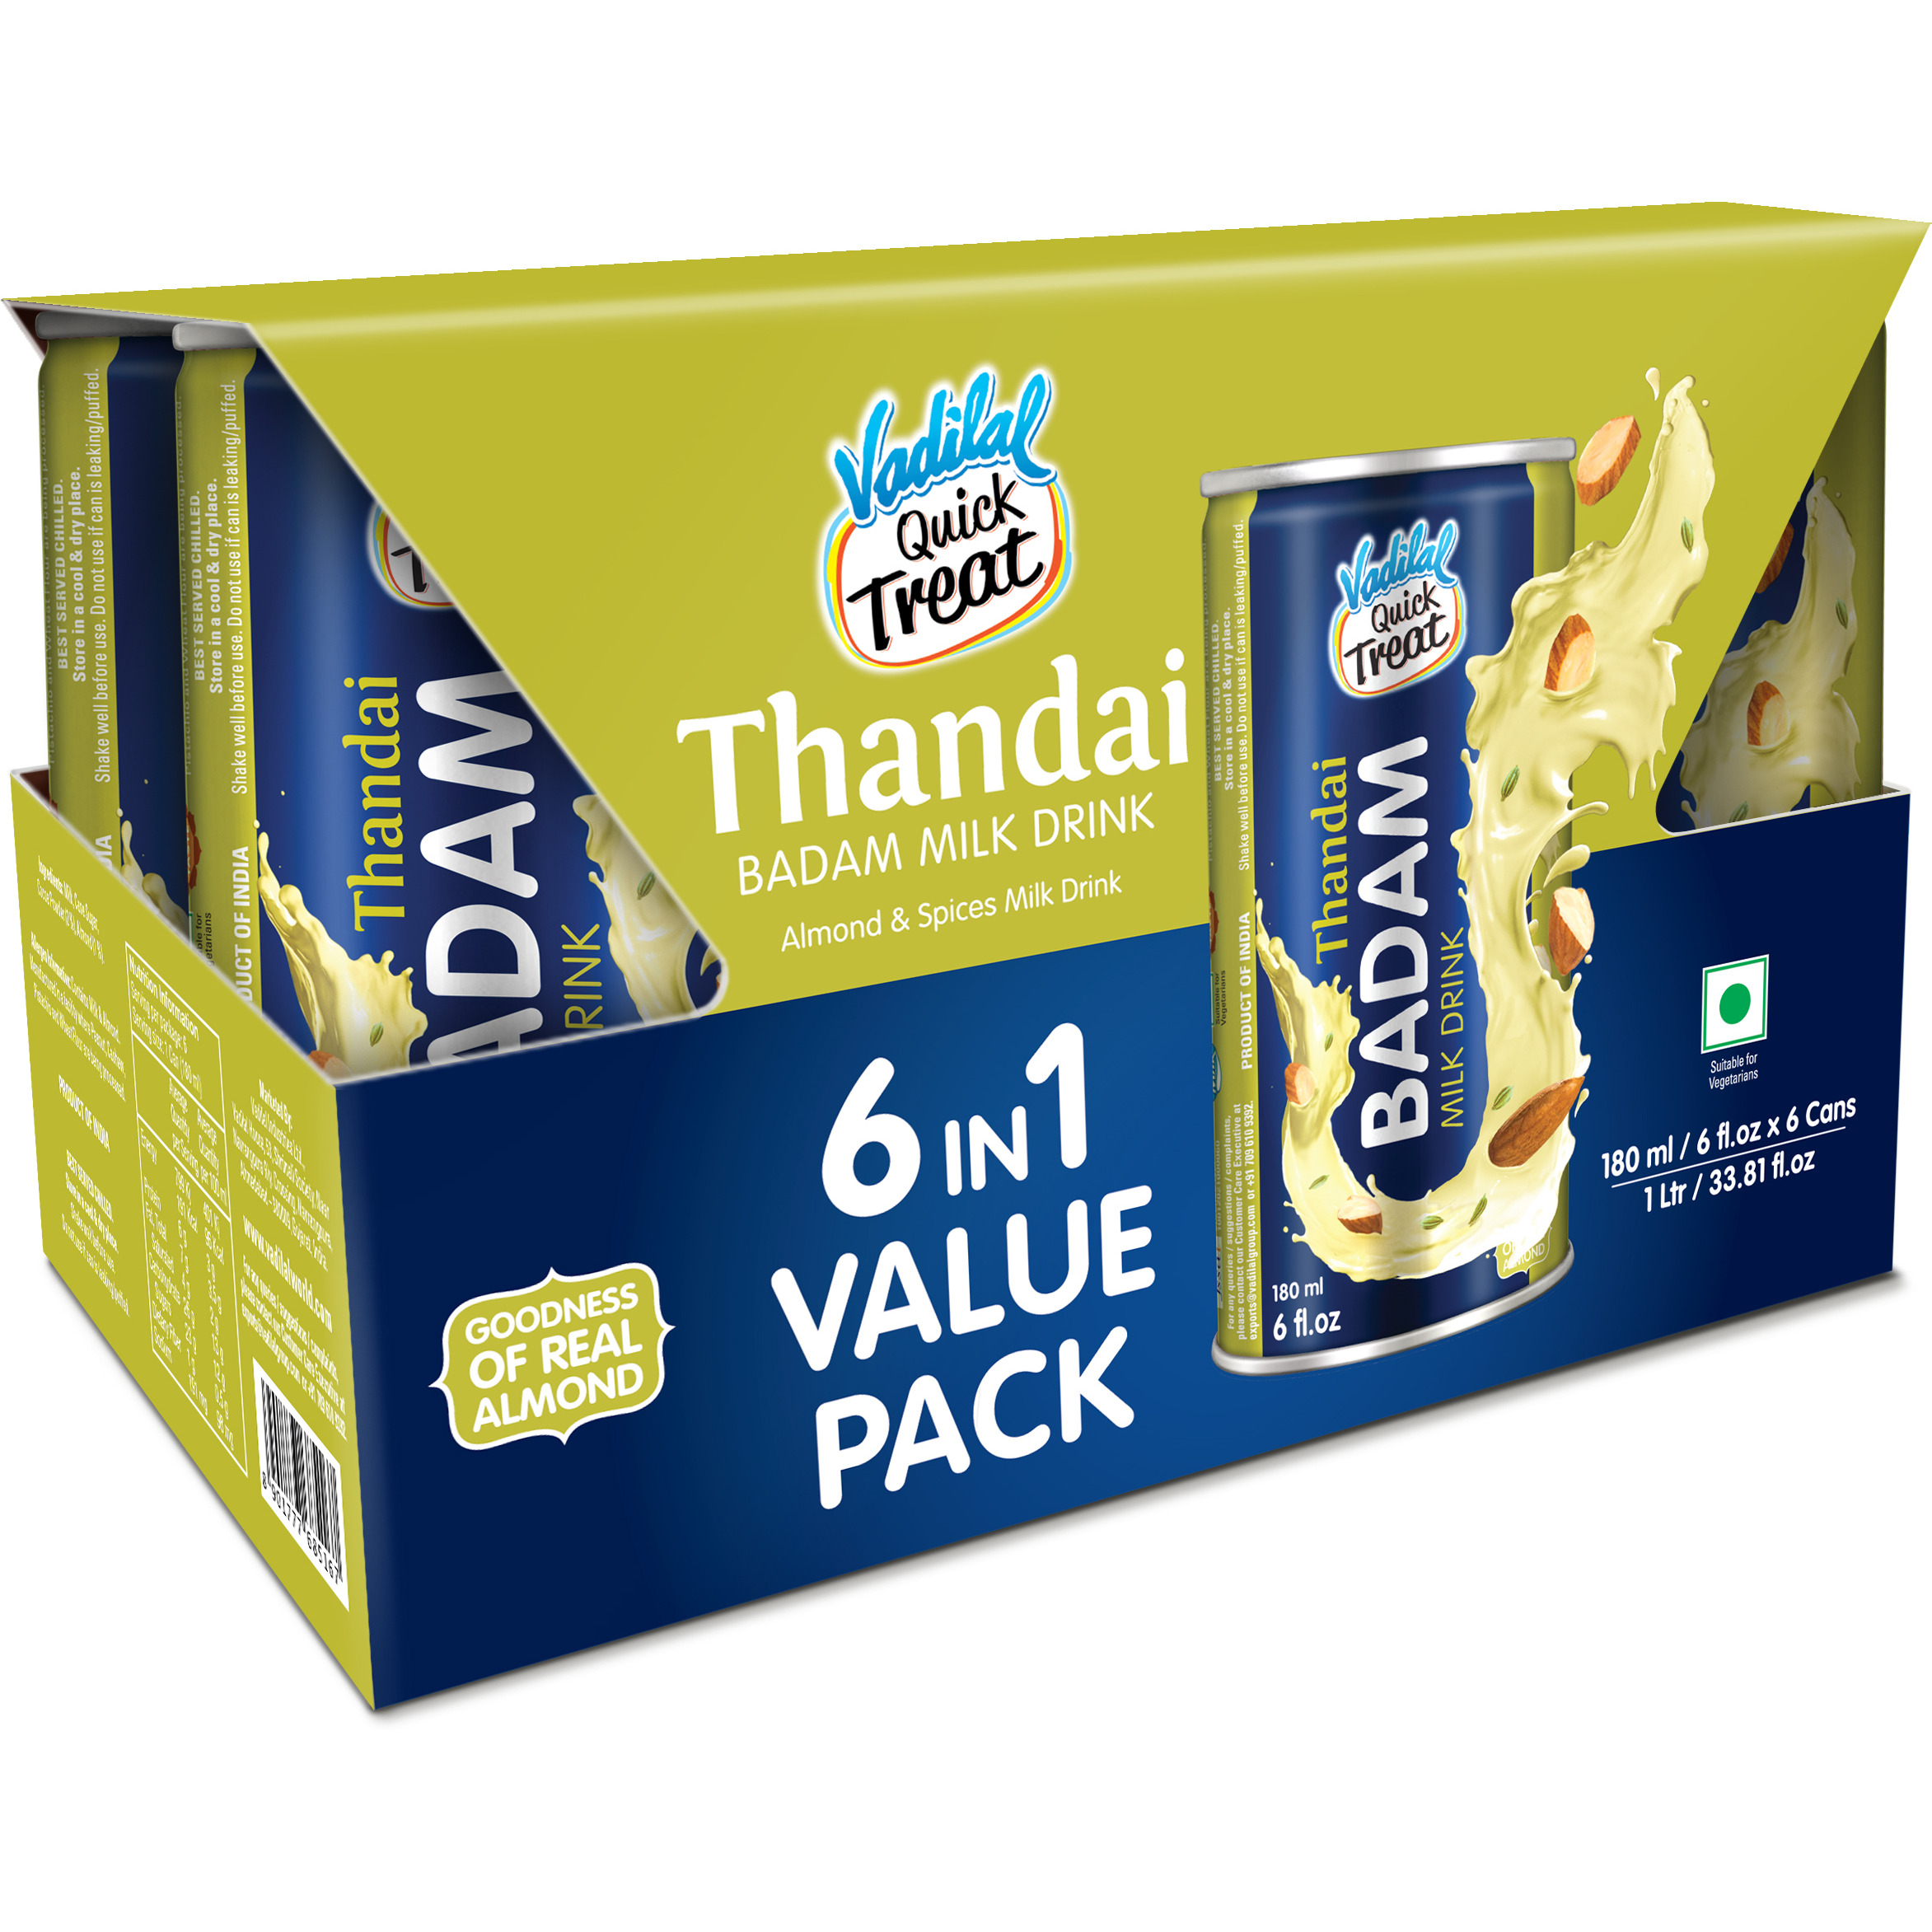 Case of 6 - Vadilal Thandai Badam Milk Drink 6 In 1 Value Pack - 180 Ml (6 Fl Oz)